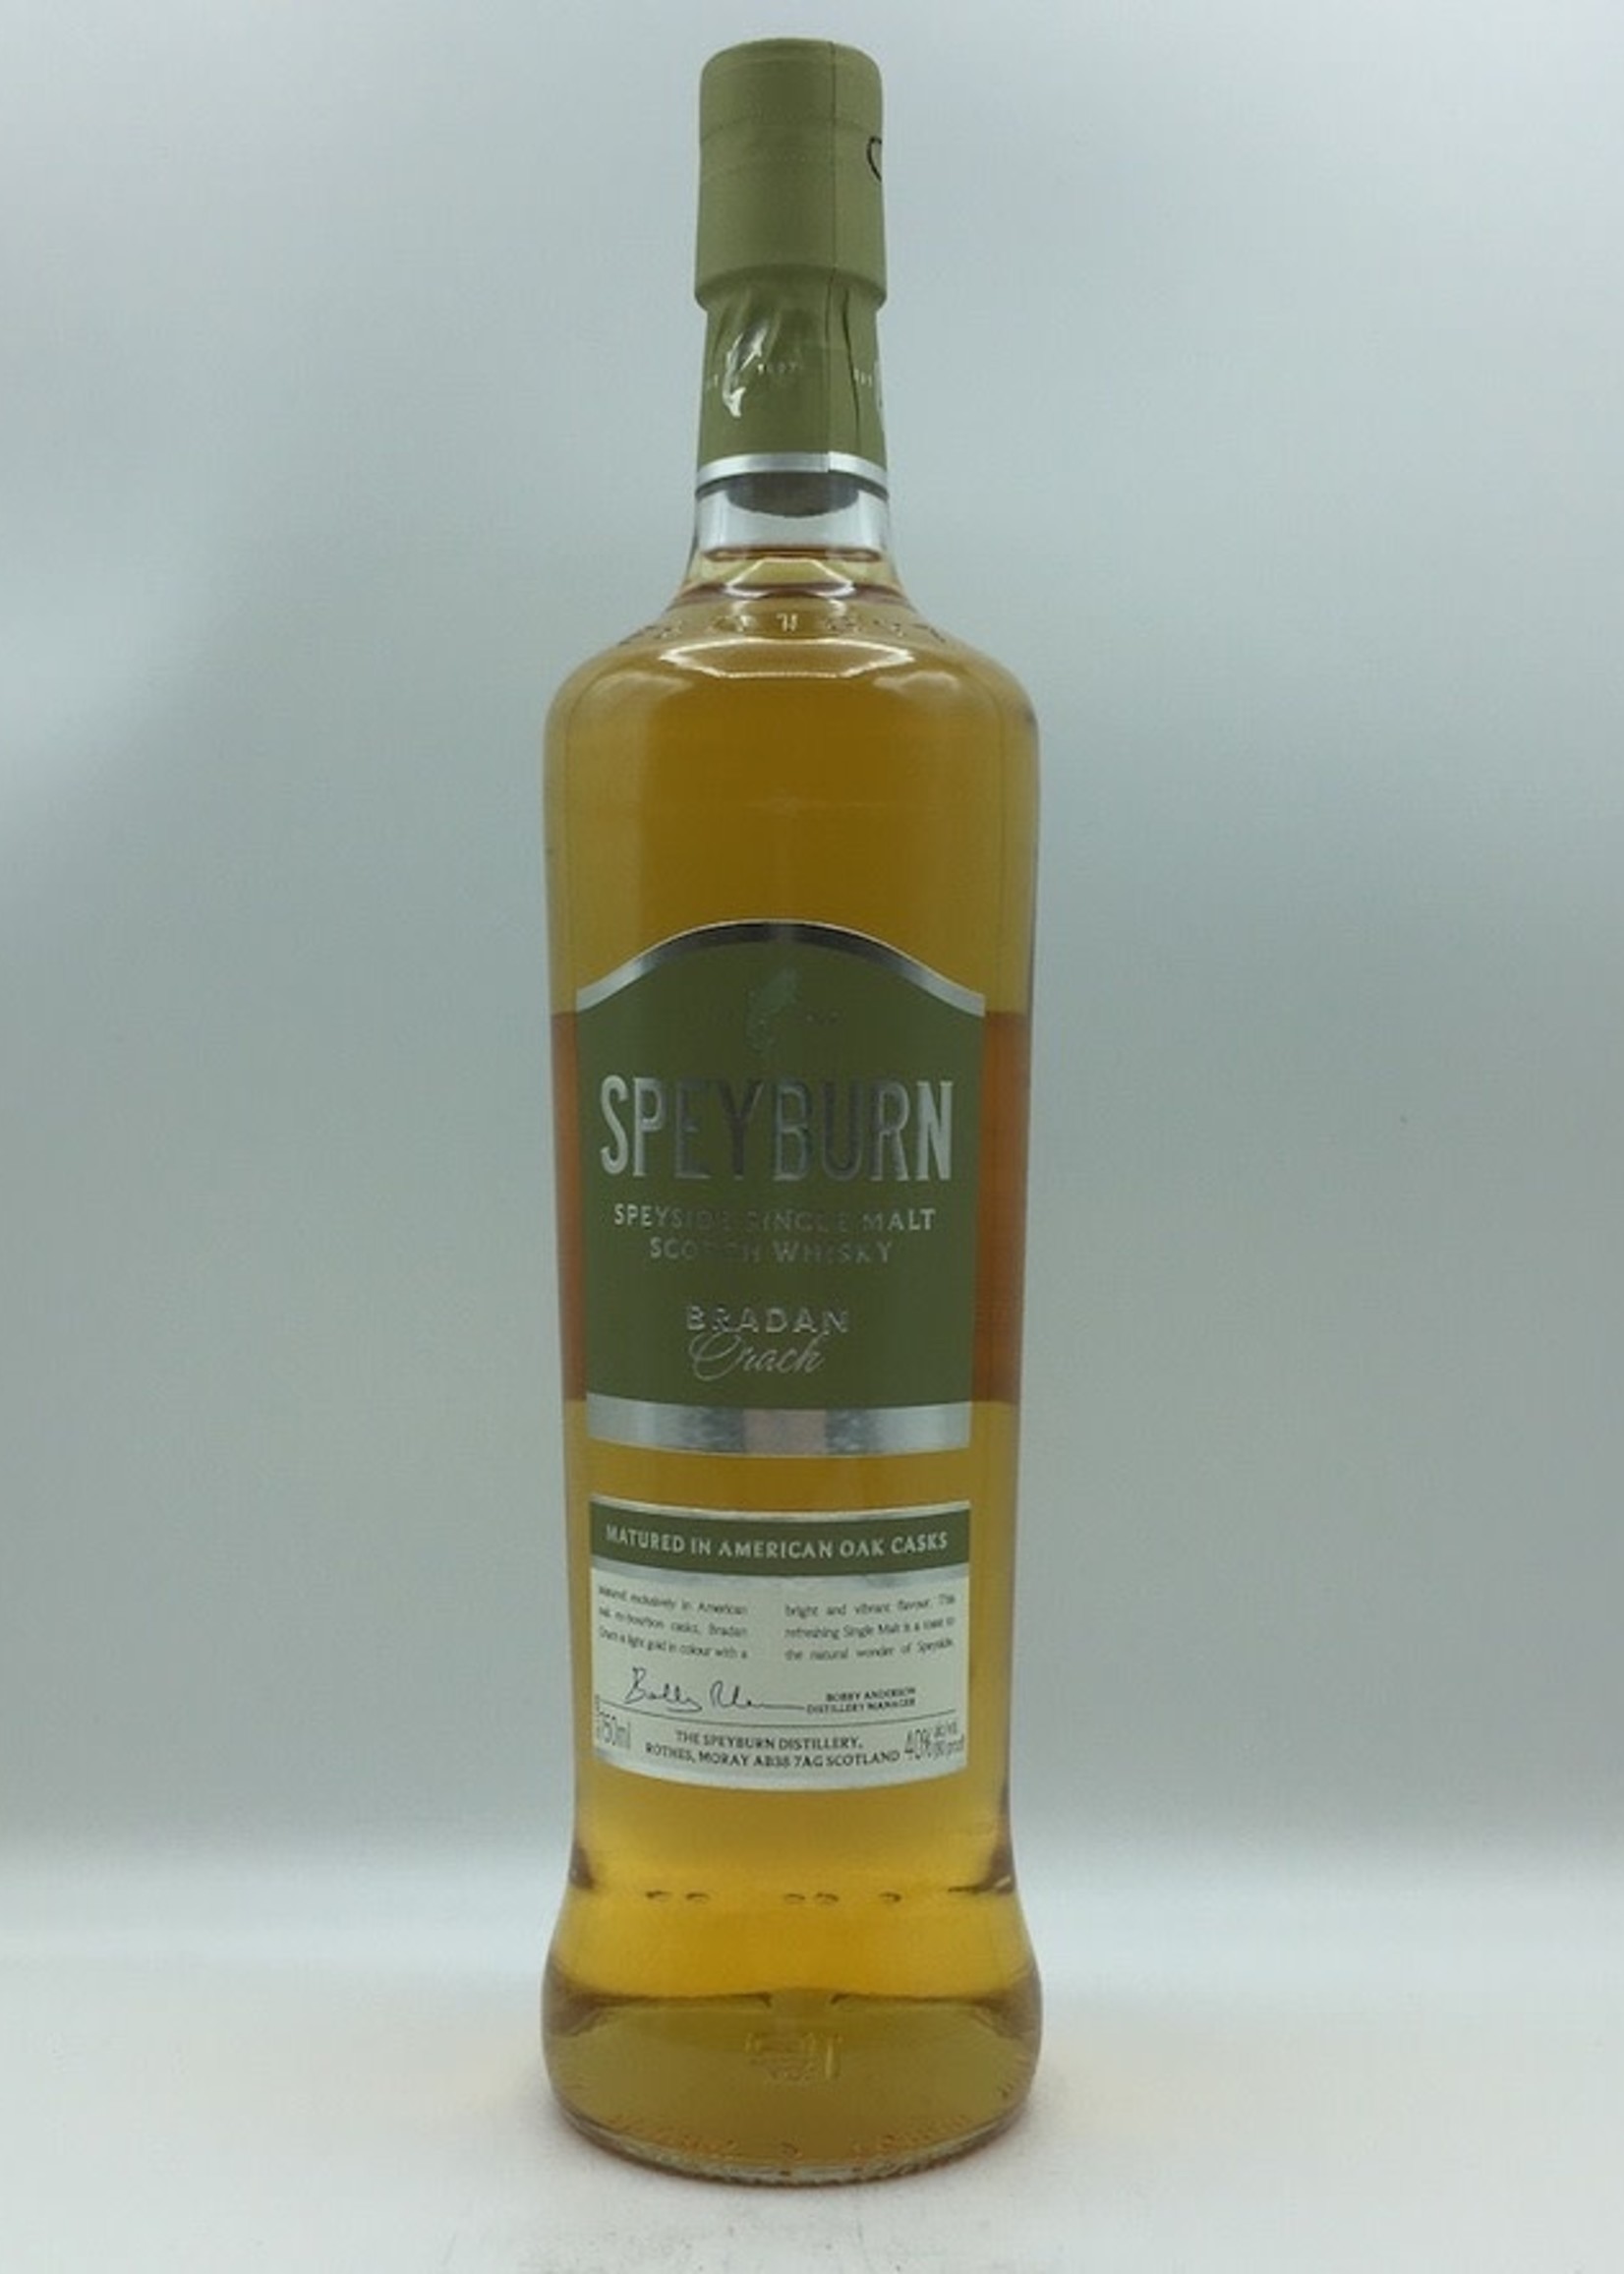 Speyburn Speyside Braden Orach Scotch Whisky750ML